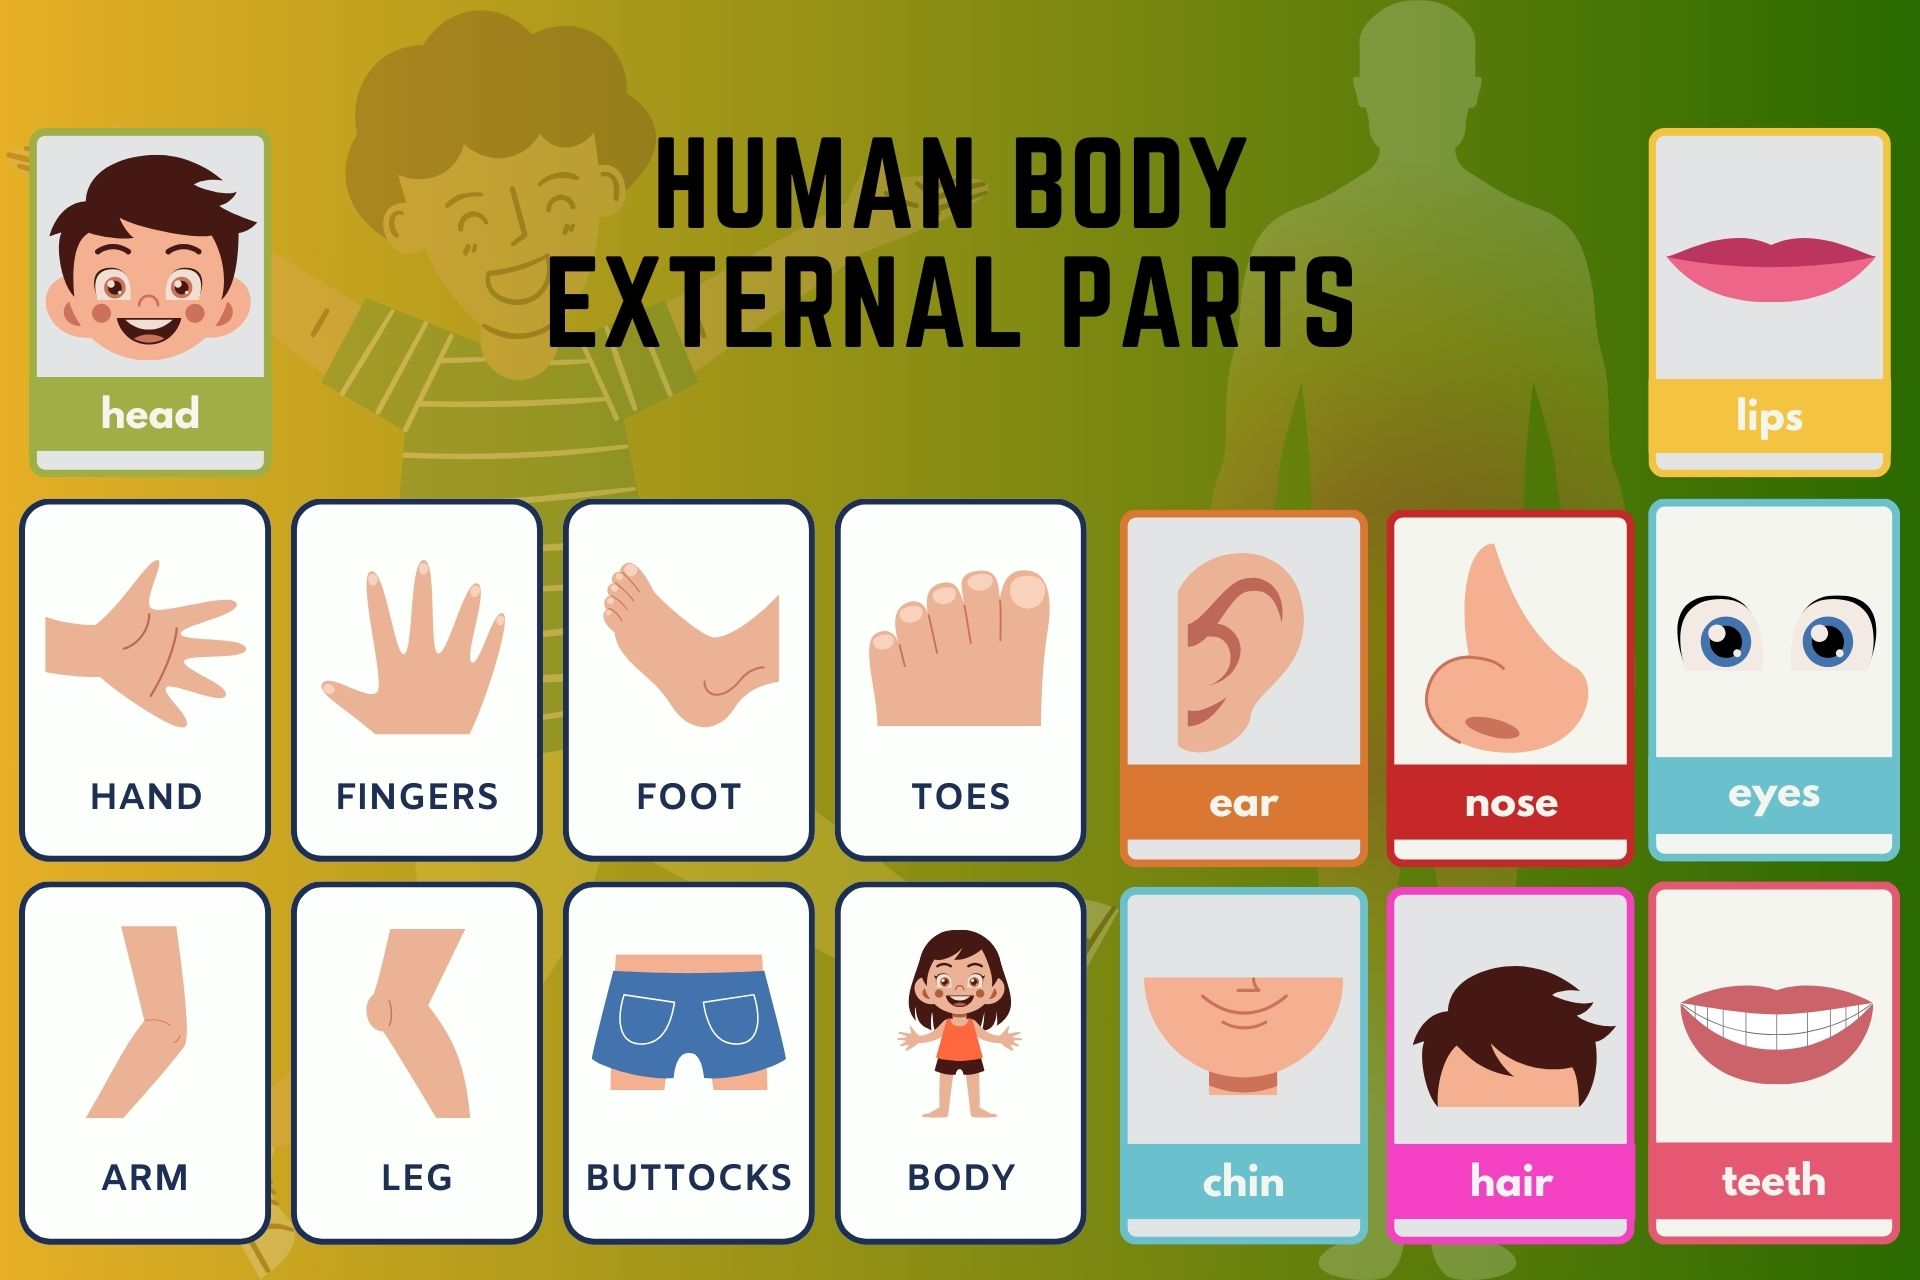 Human body external parts